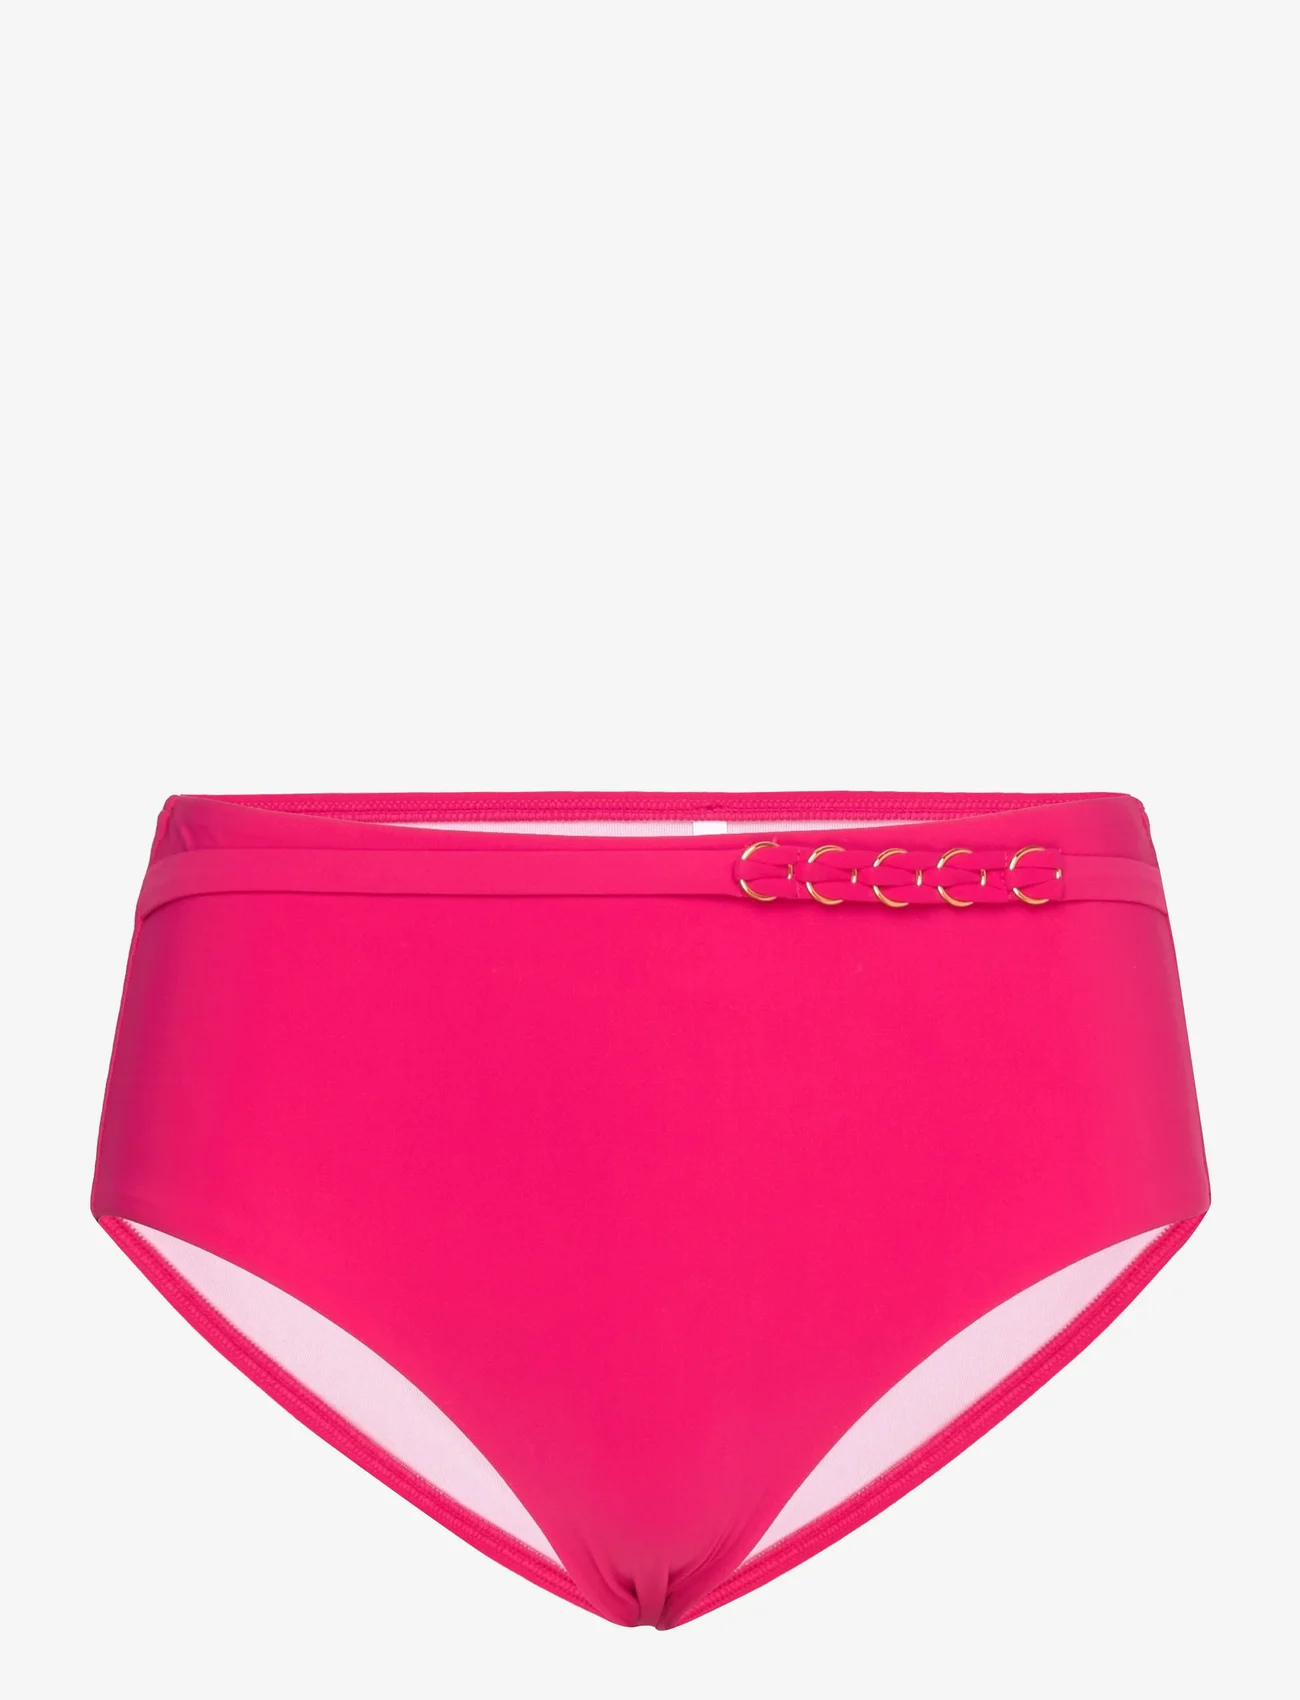 Chantelle Beach - Emblem Bikini Full brief - bikinihosen mit hoher taille - cybele pink - 1